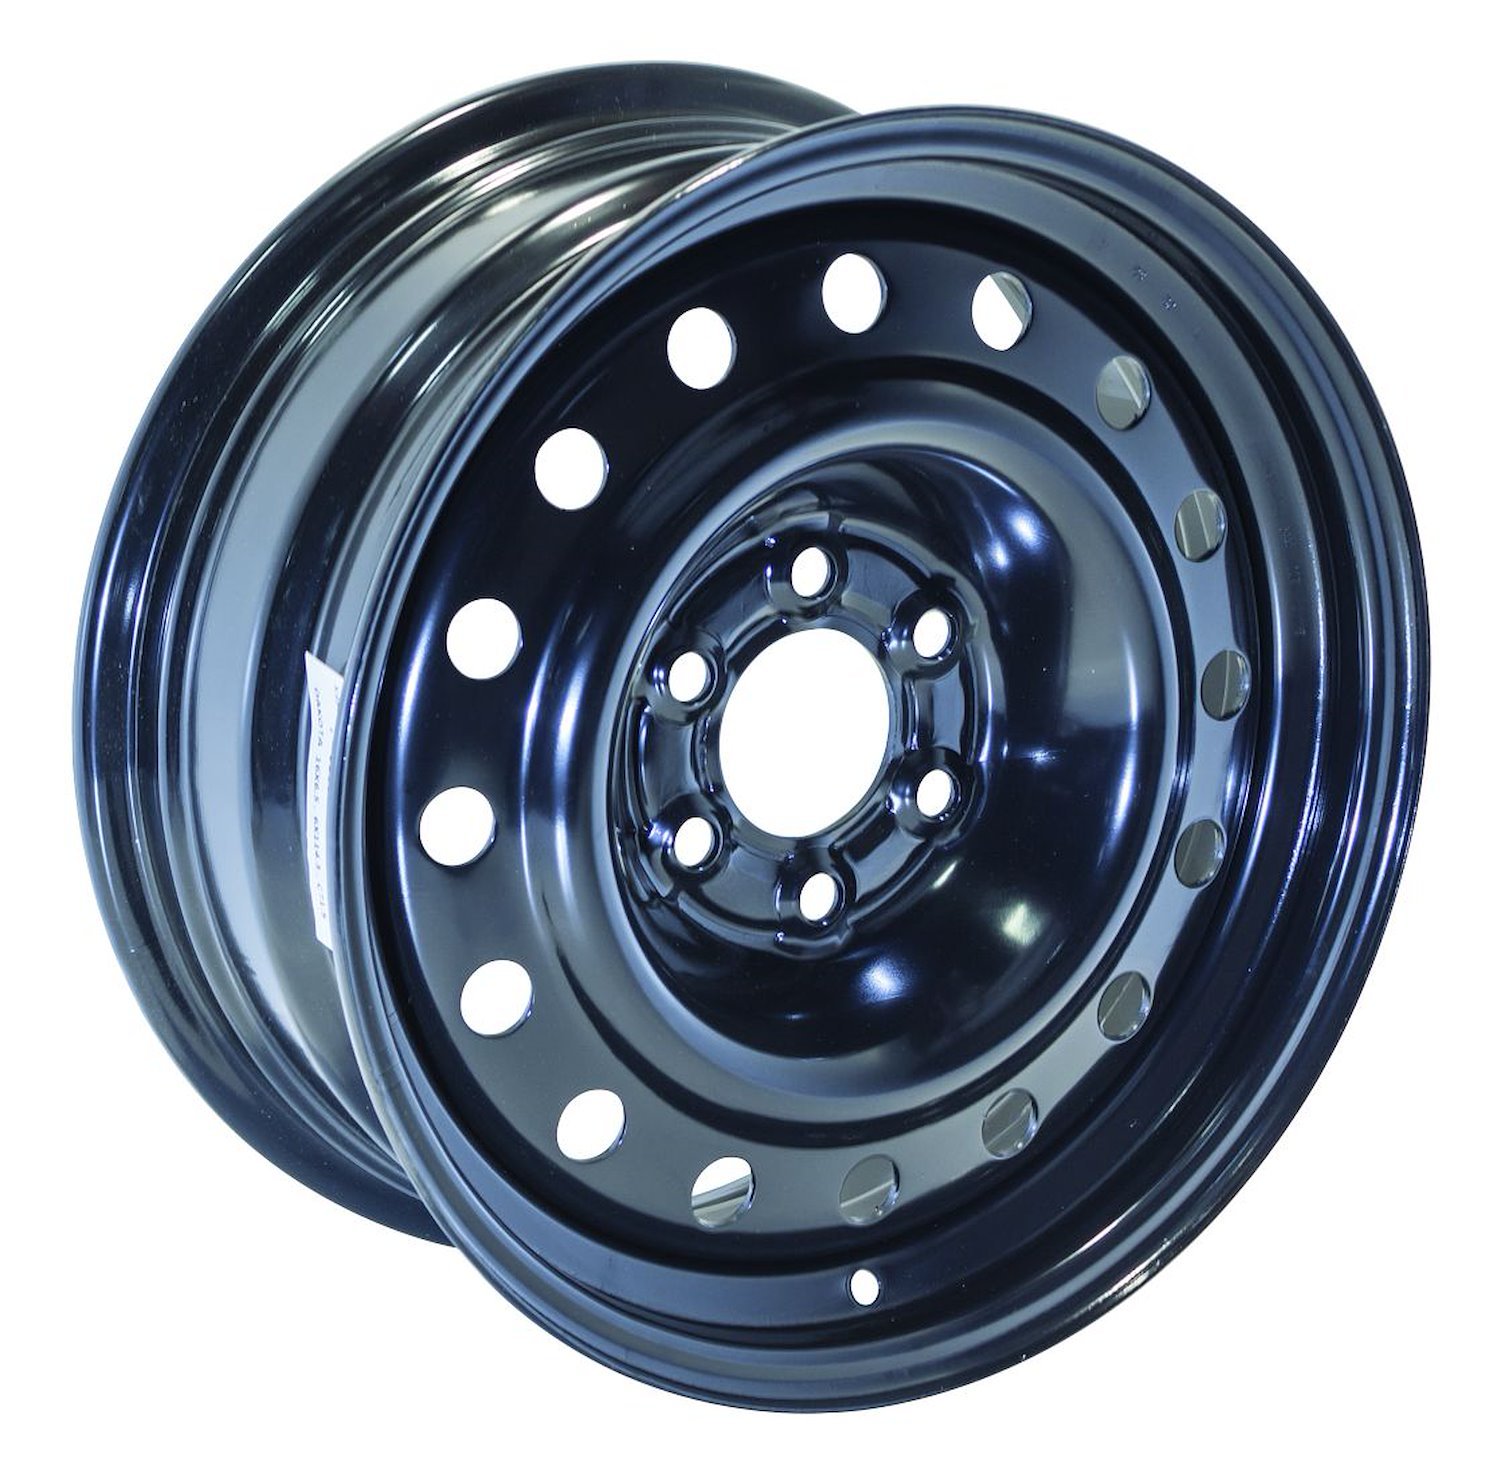 X46444 Steel Wheel [Size: 16" x 6.50"] Black Finish